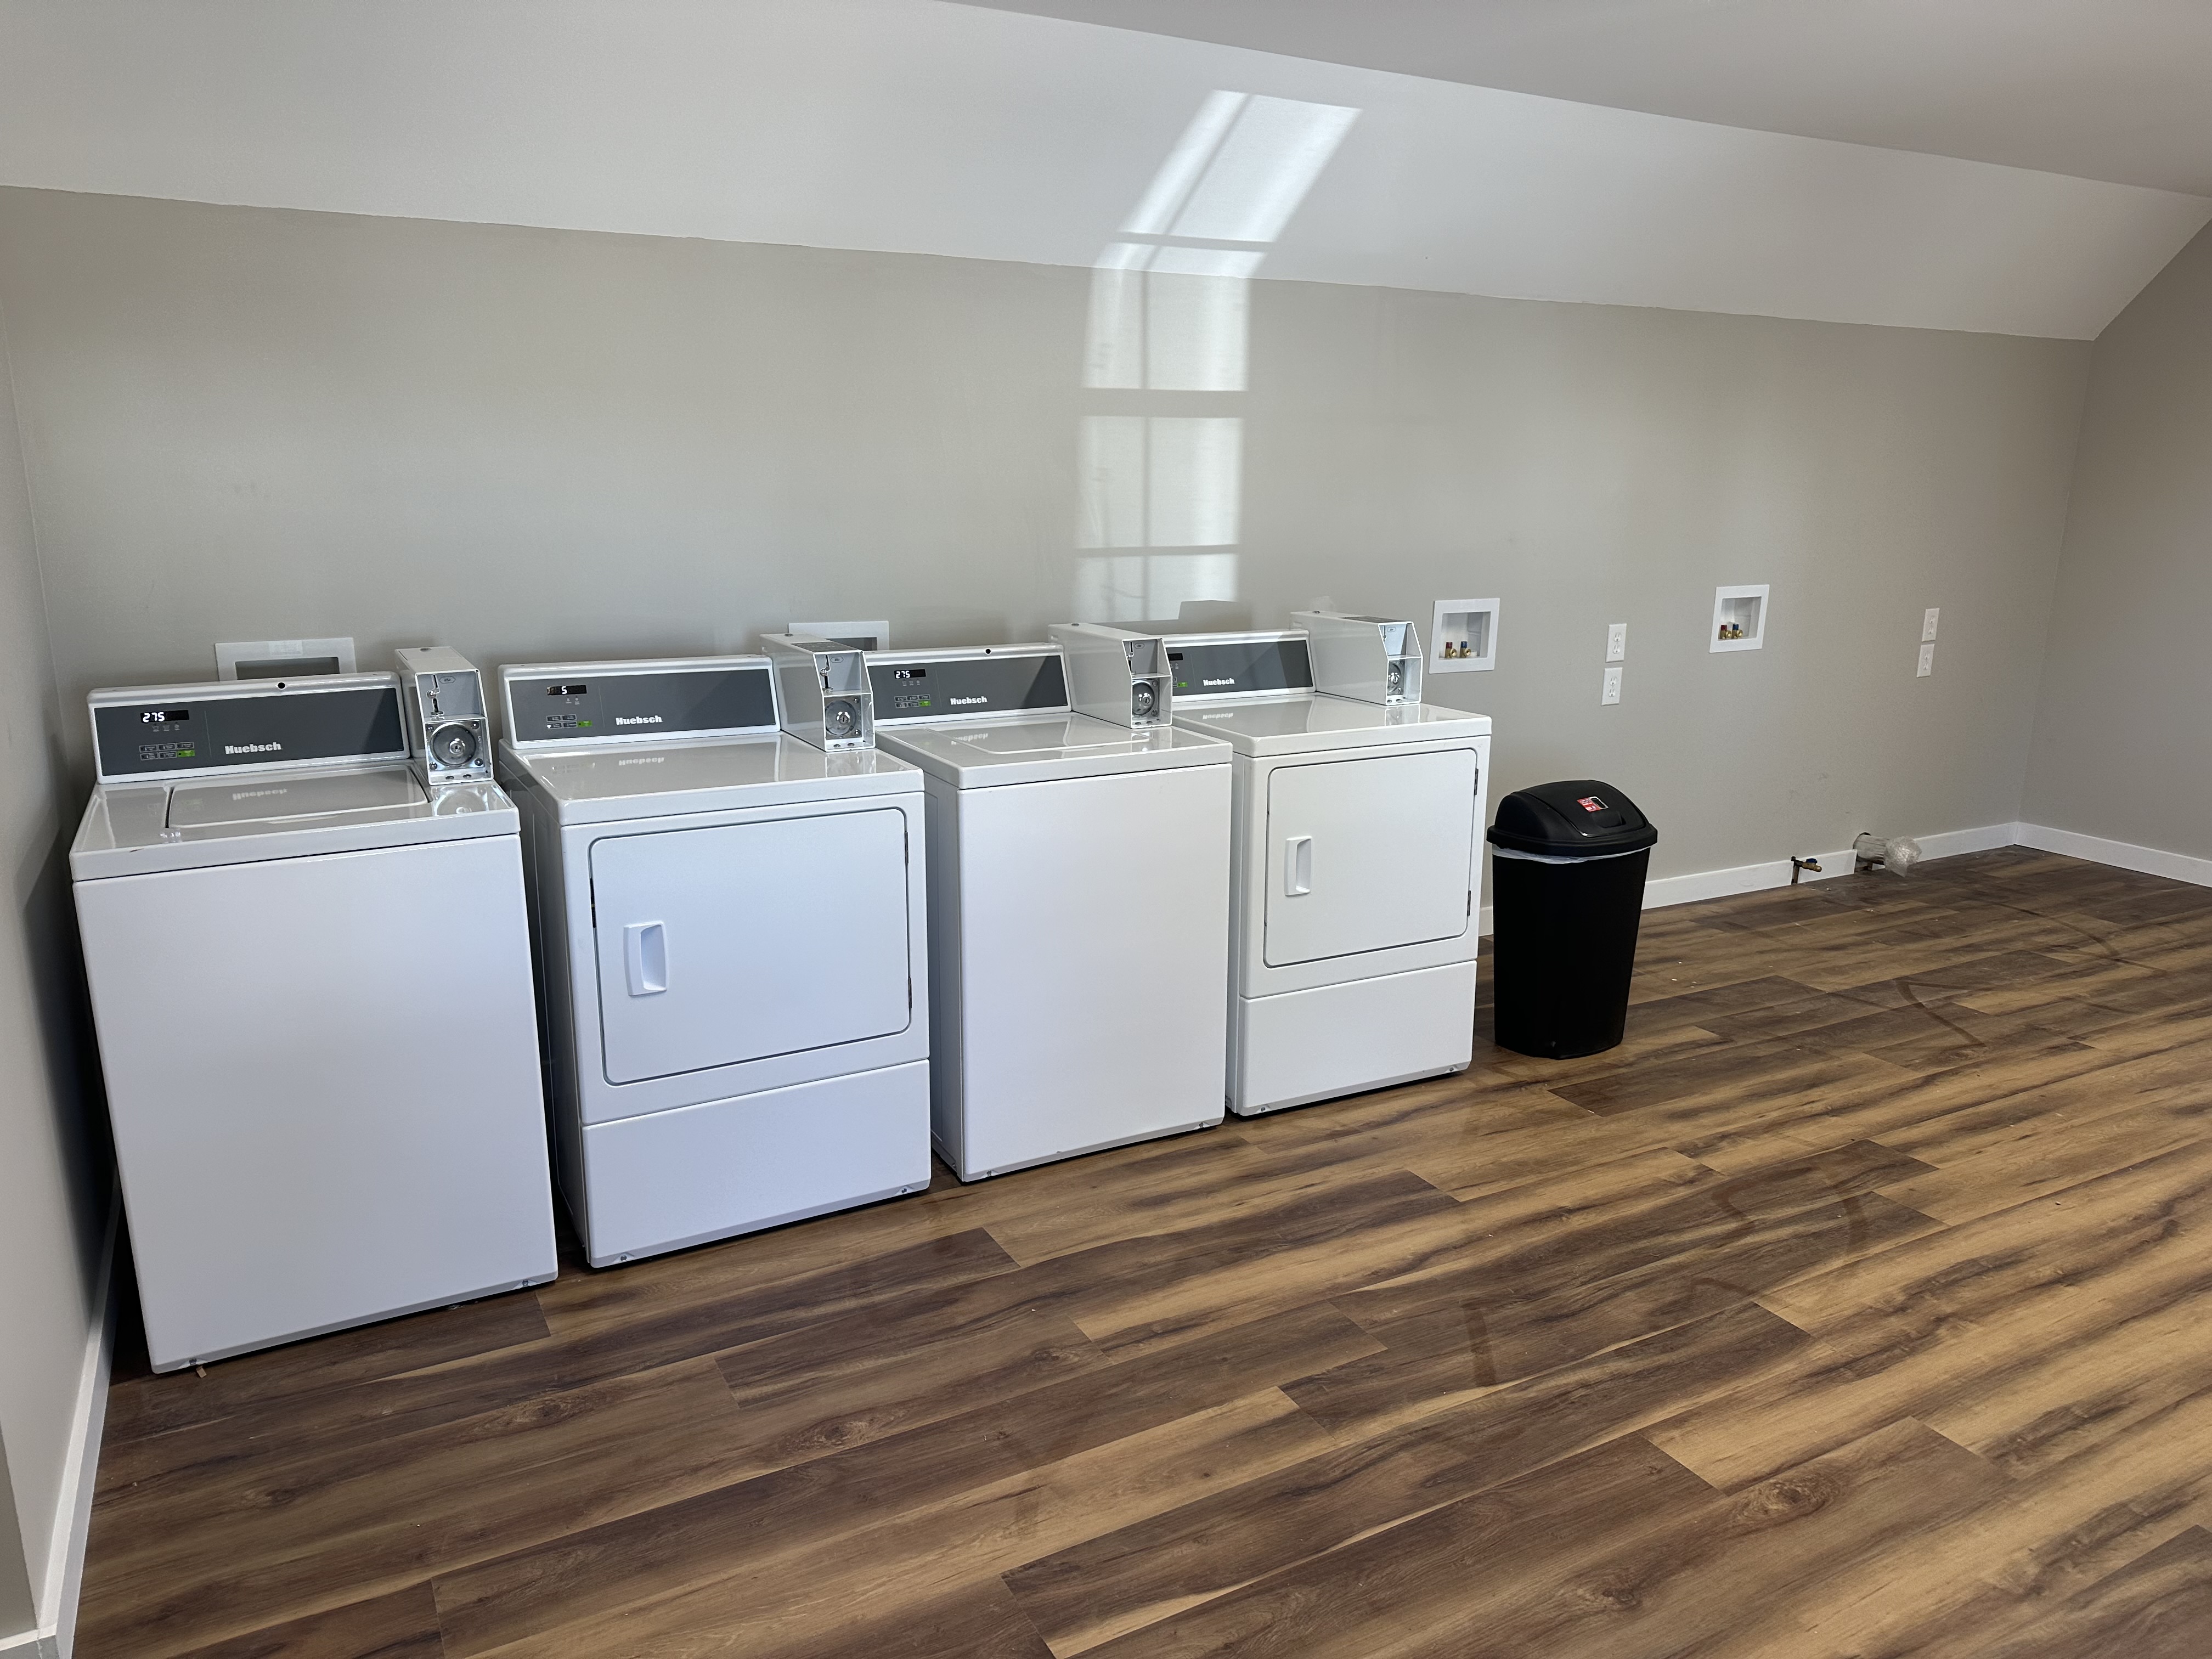 laundromat laundry machine and dryer